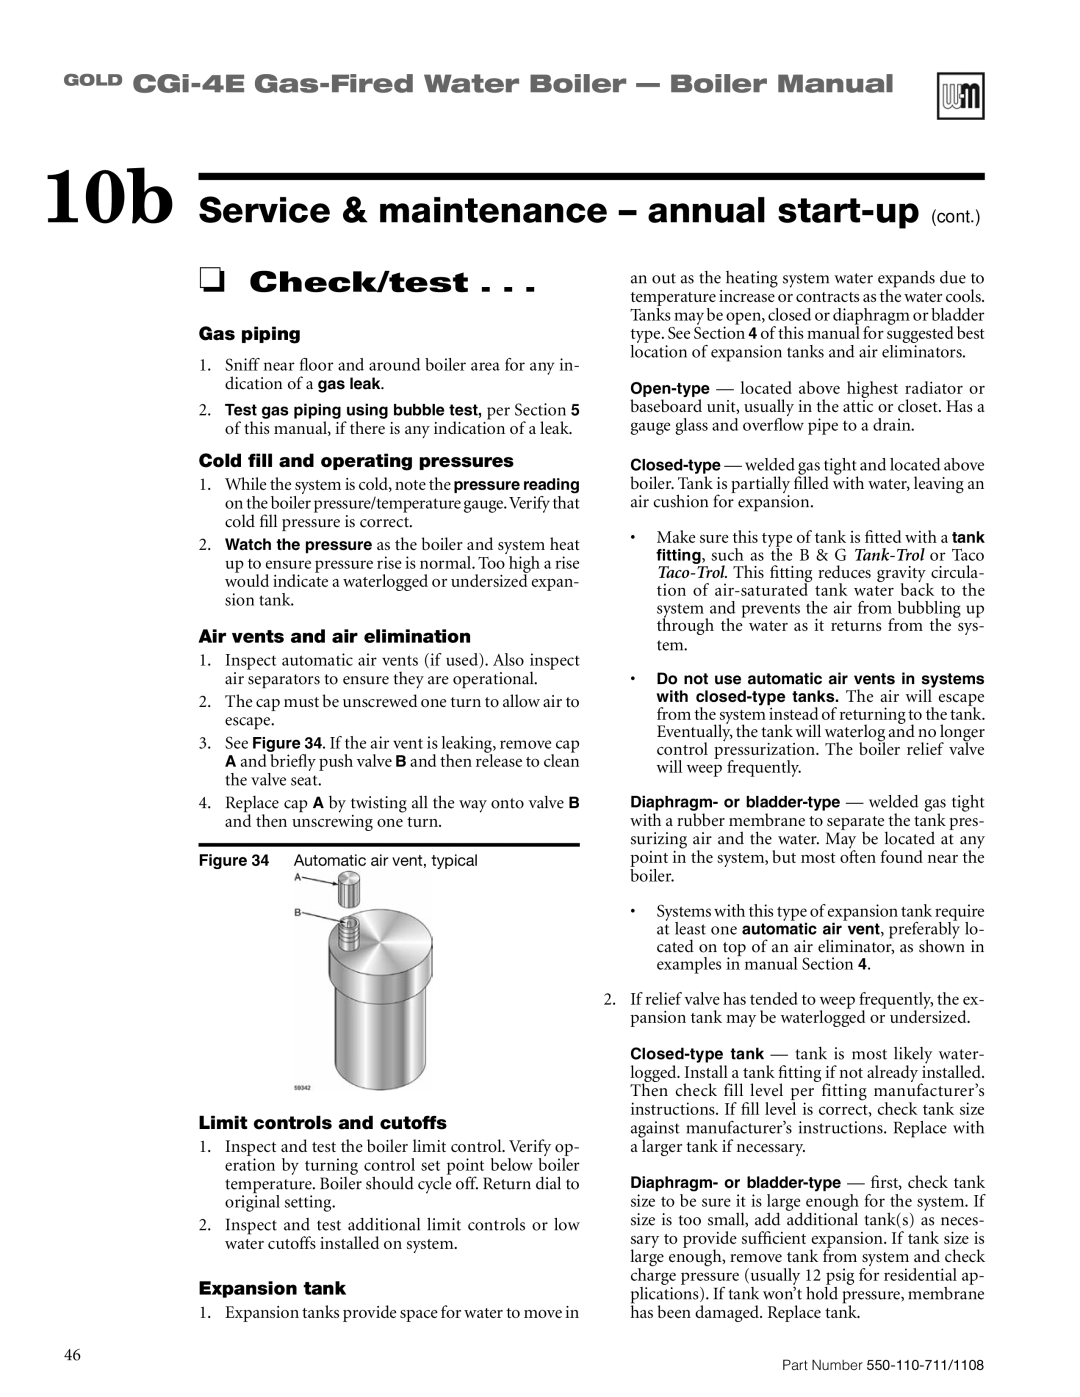 Weil-McLain CGI-4E Check/test, 10b Service & maintenance - annual start-up cont, Gas piping, Air vents and air elimination 